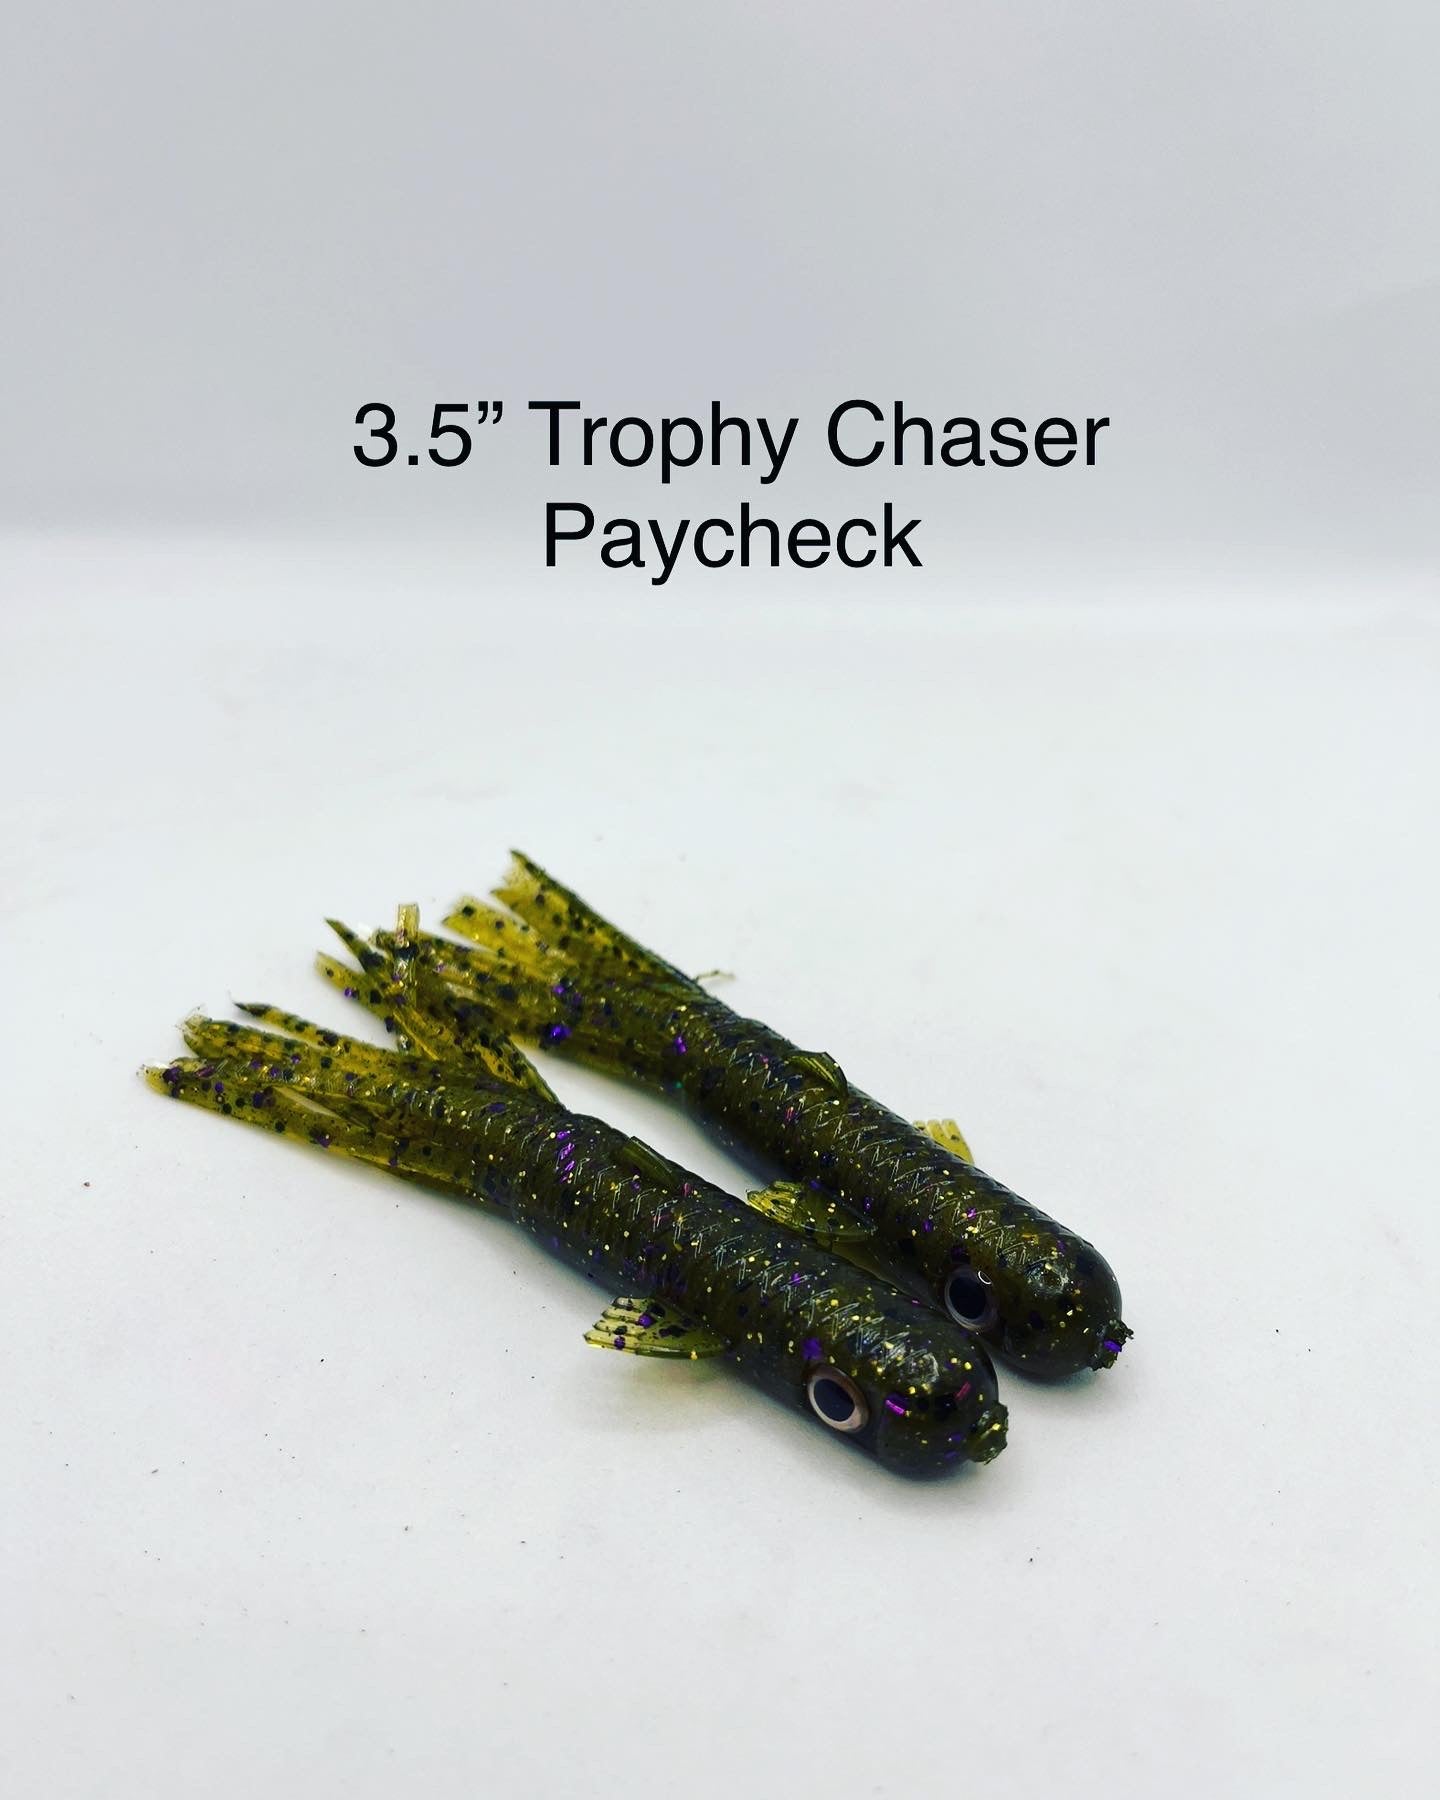 3.5" Trophy Chaser